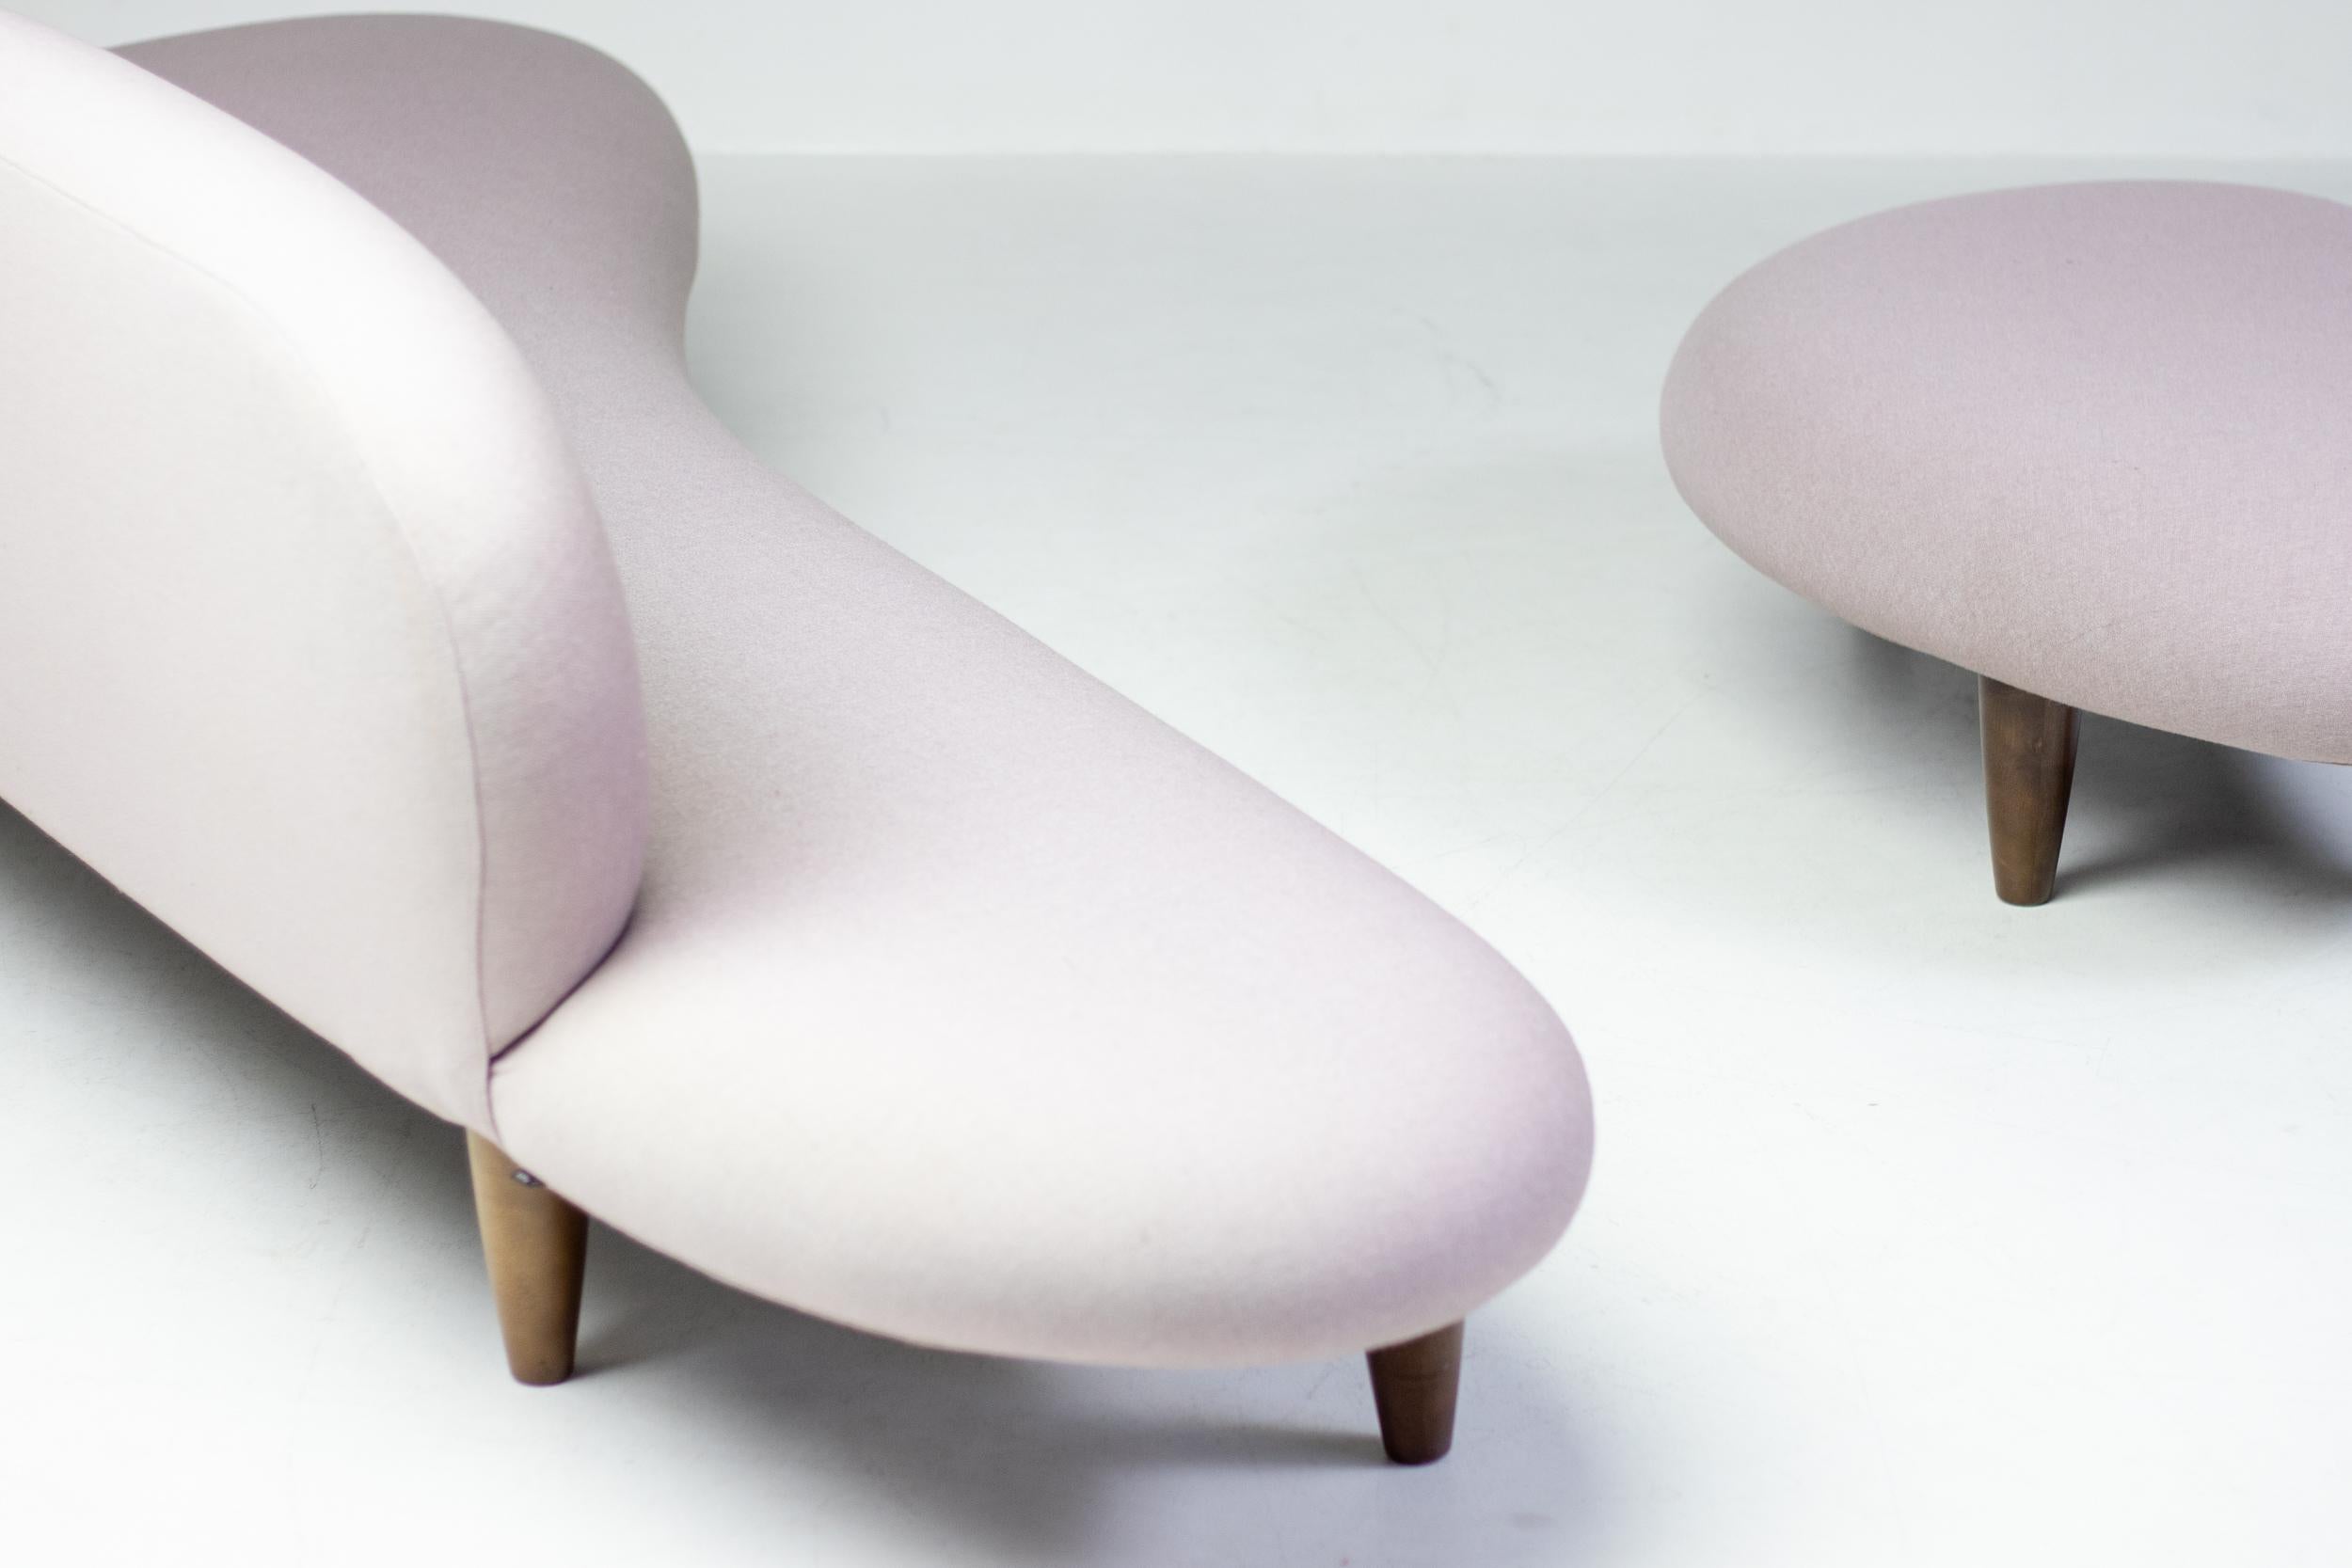 Japanese Freeform Sofa and Ottoman by Isamu Noguchi